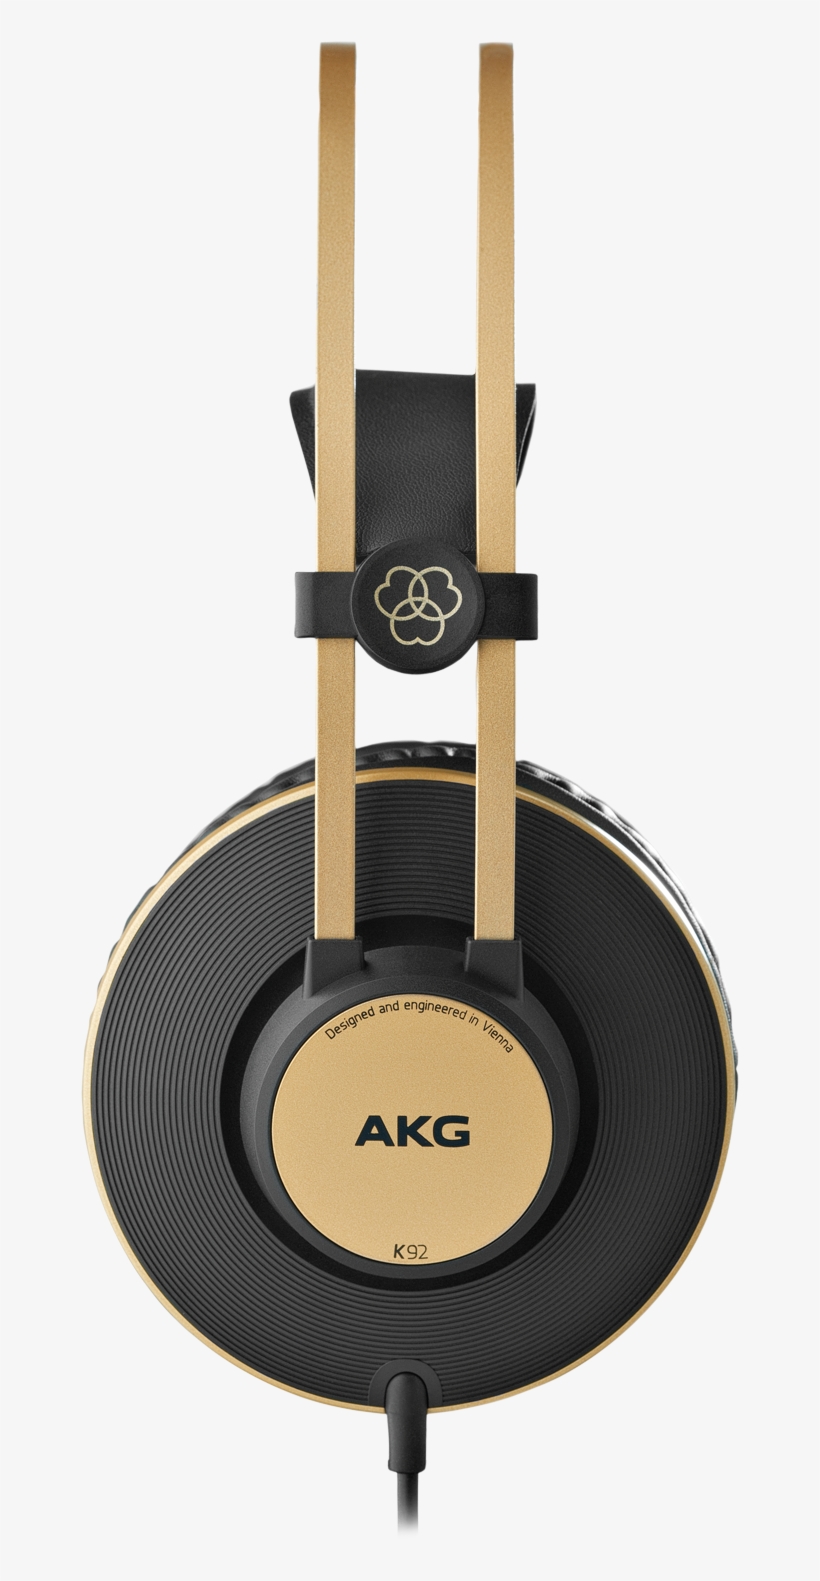 Alternate Views - Akg Pro Audio K92 Closed-back Headphone, transparent png #5646913